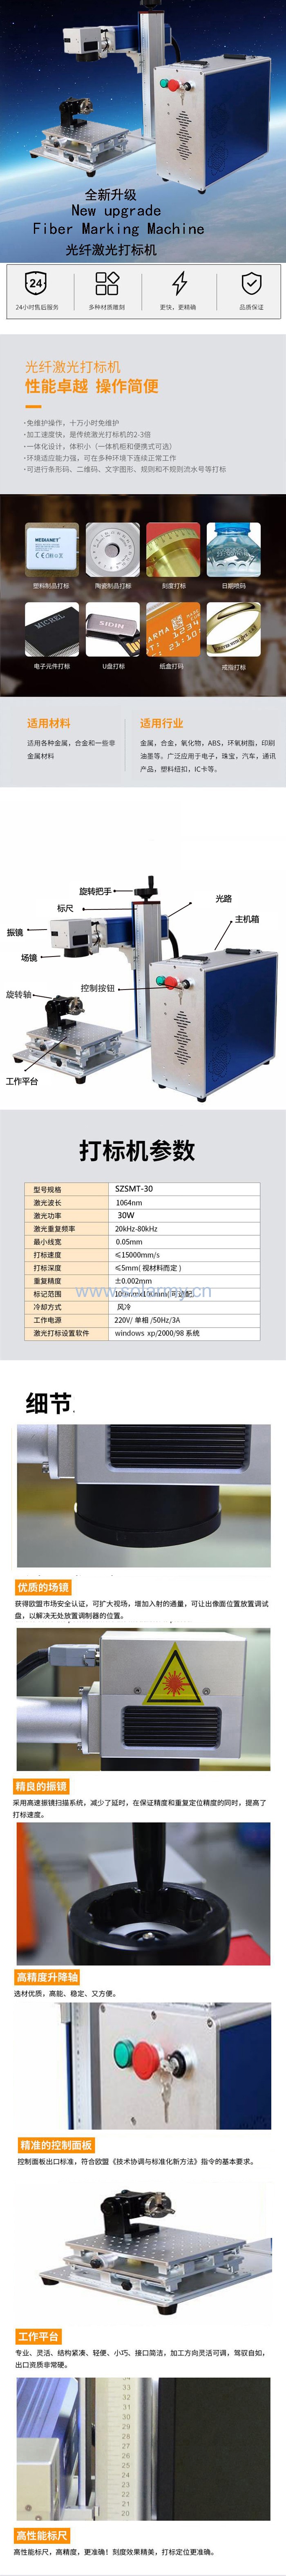 30W桌面机光纤中文.jpg